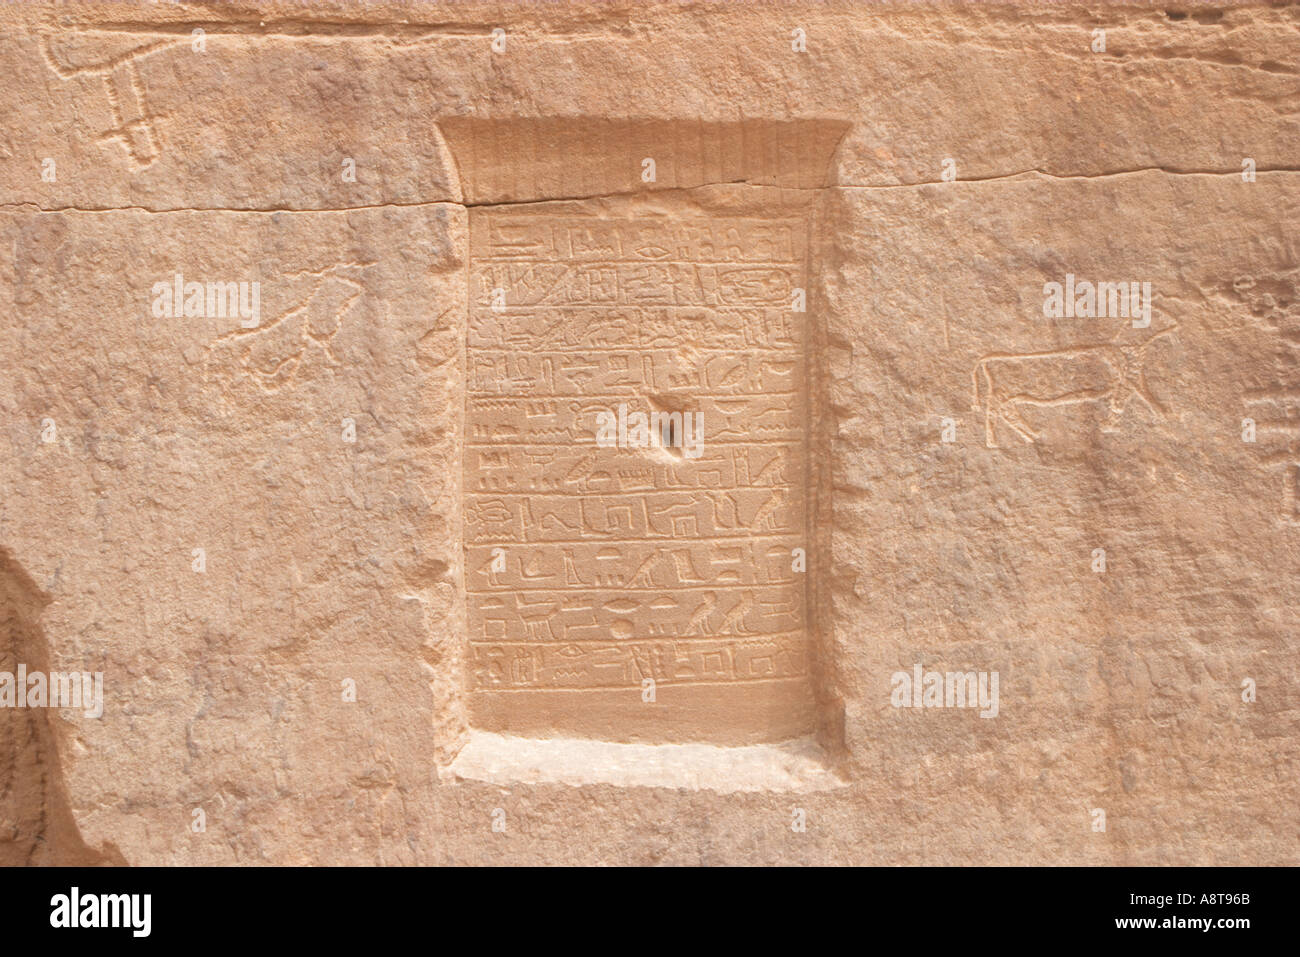 Stele carved in the mountains near Hathor Temple at Sarabit al Khadim Stock Photo